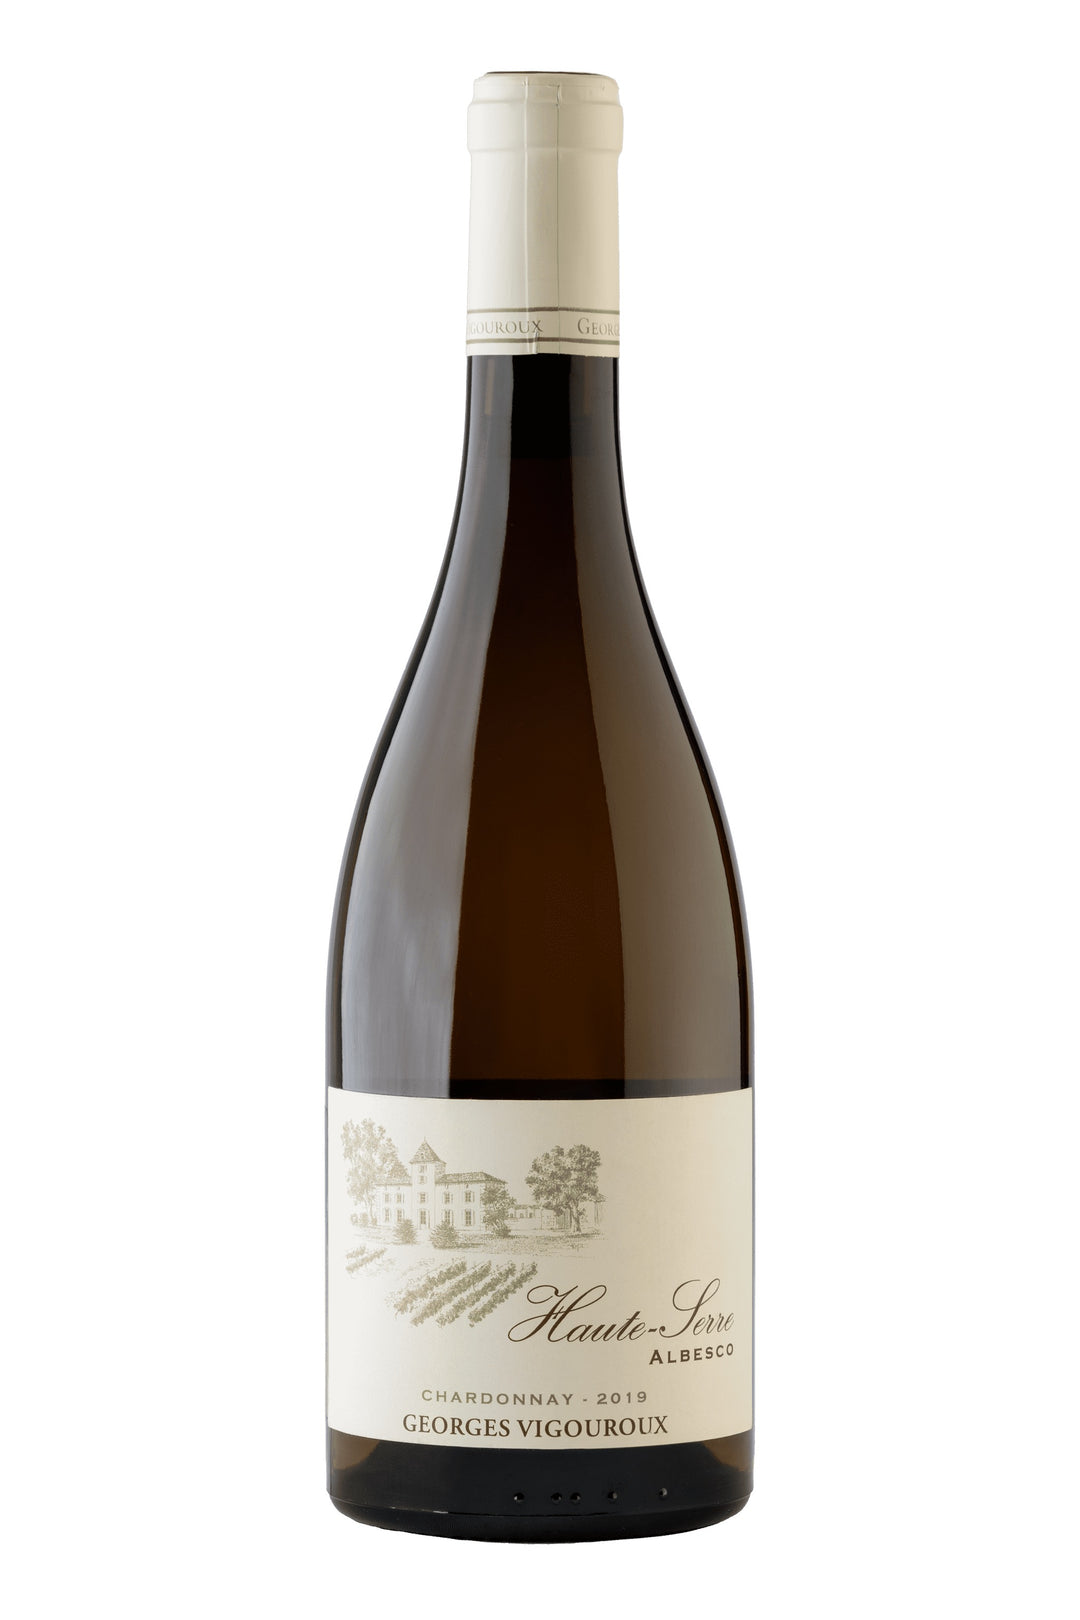 Albesco Haute Serre Chardonnay (Georges Vigouroux) 2019 - Default Title (V001183)